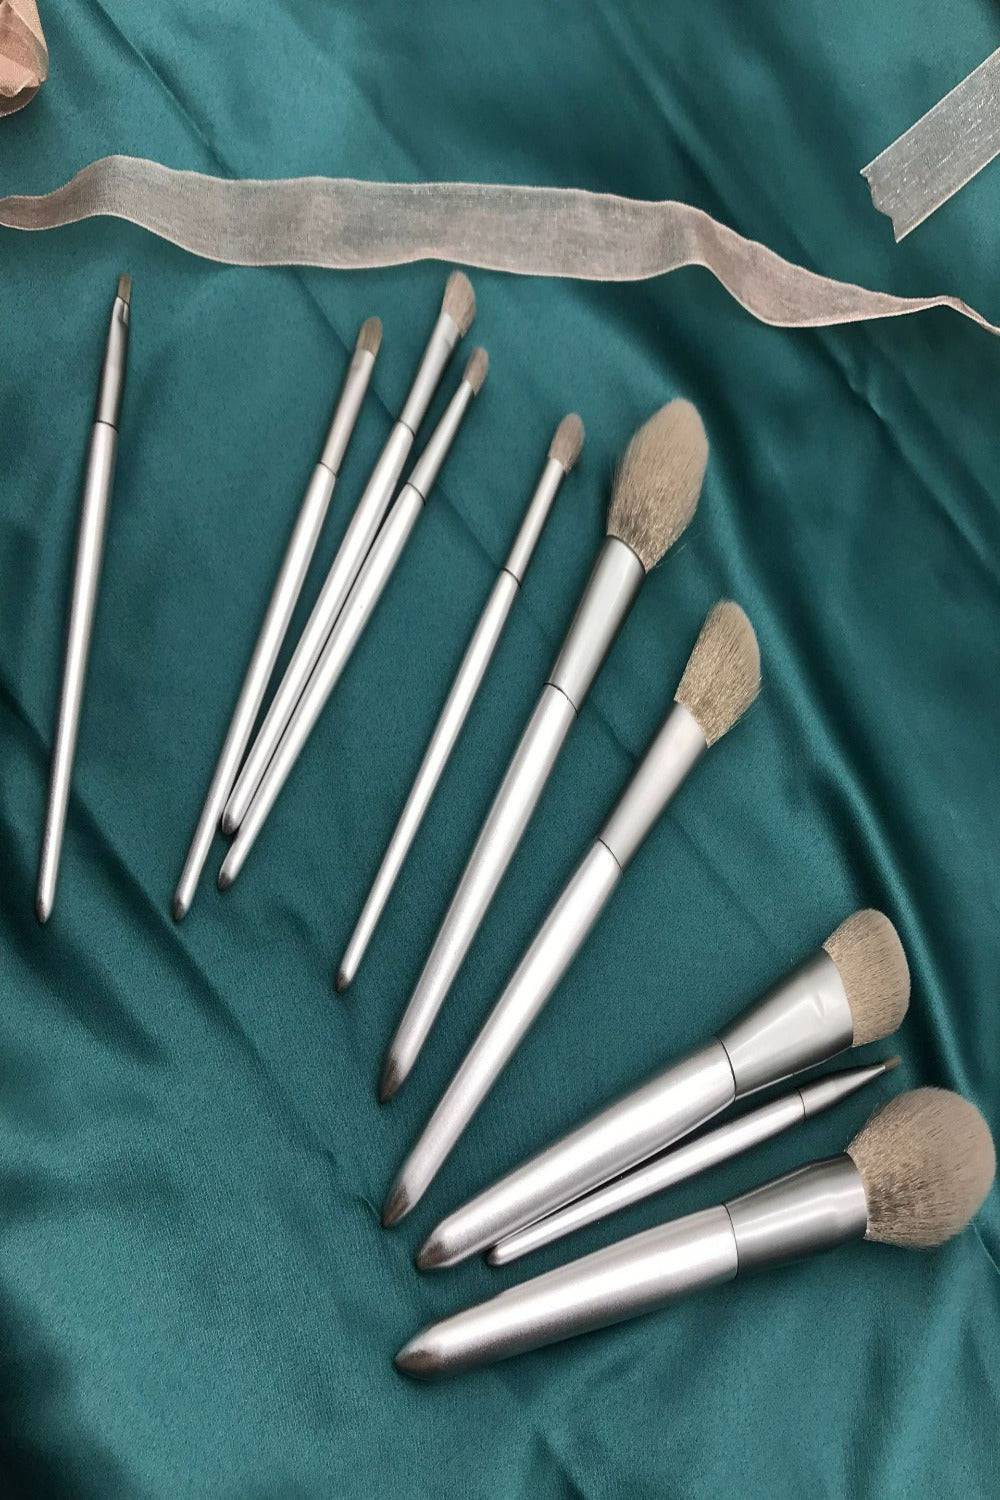 Silver Moonlight Makeup Brush Set -10 Pcs - TGC Boutique - Makeup Brush Set